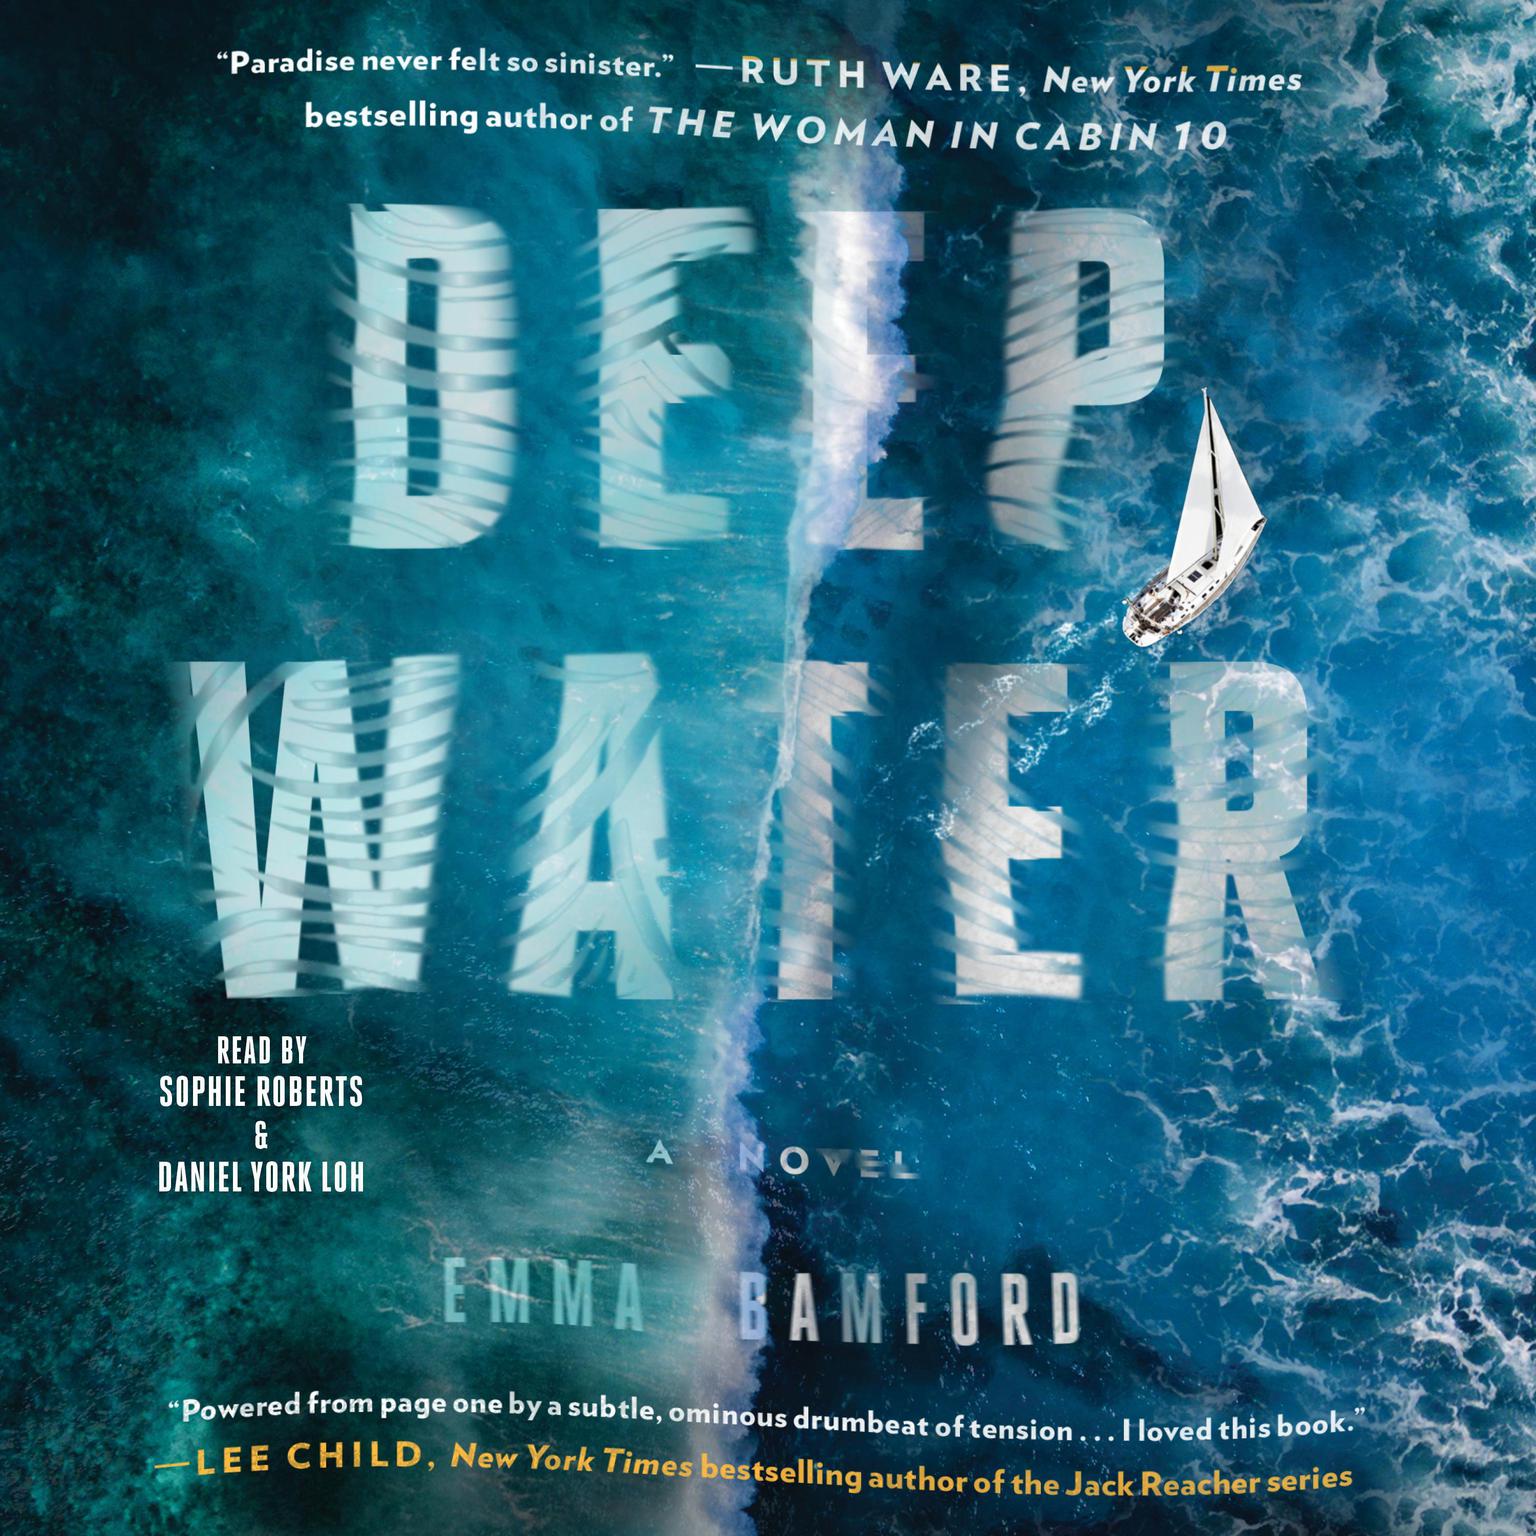 Deep Water Audiobook, by Emma Bamford